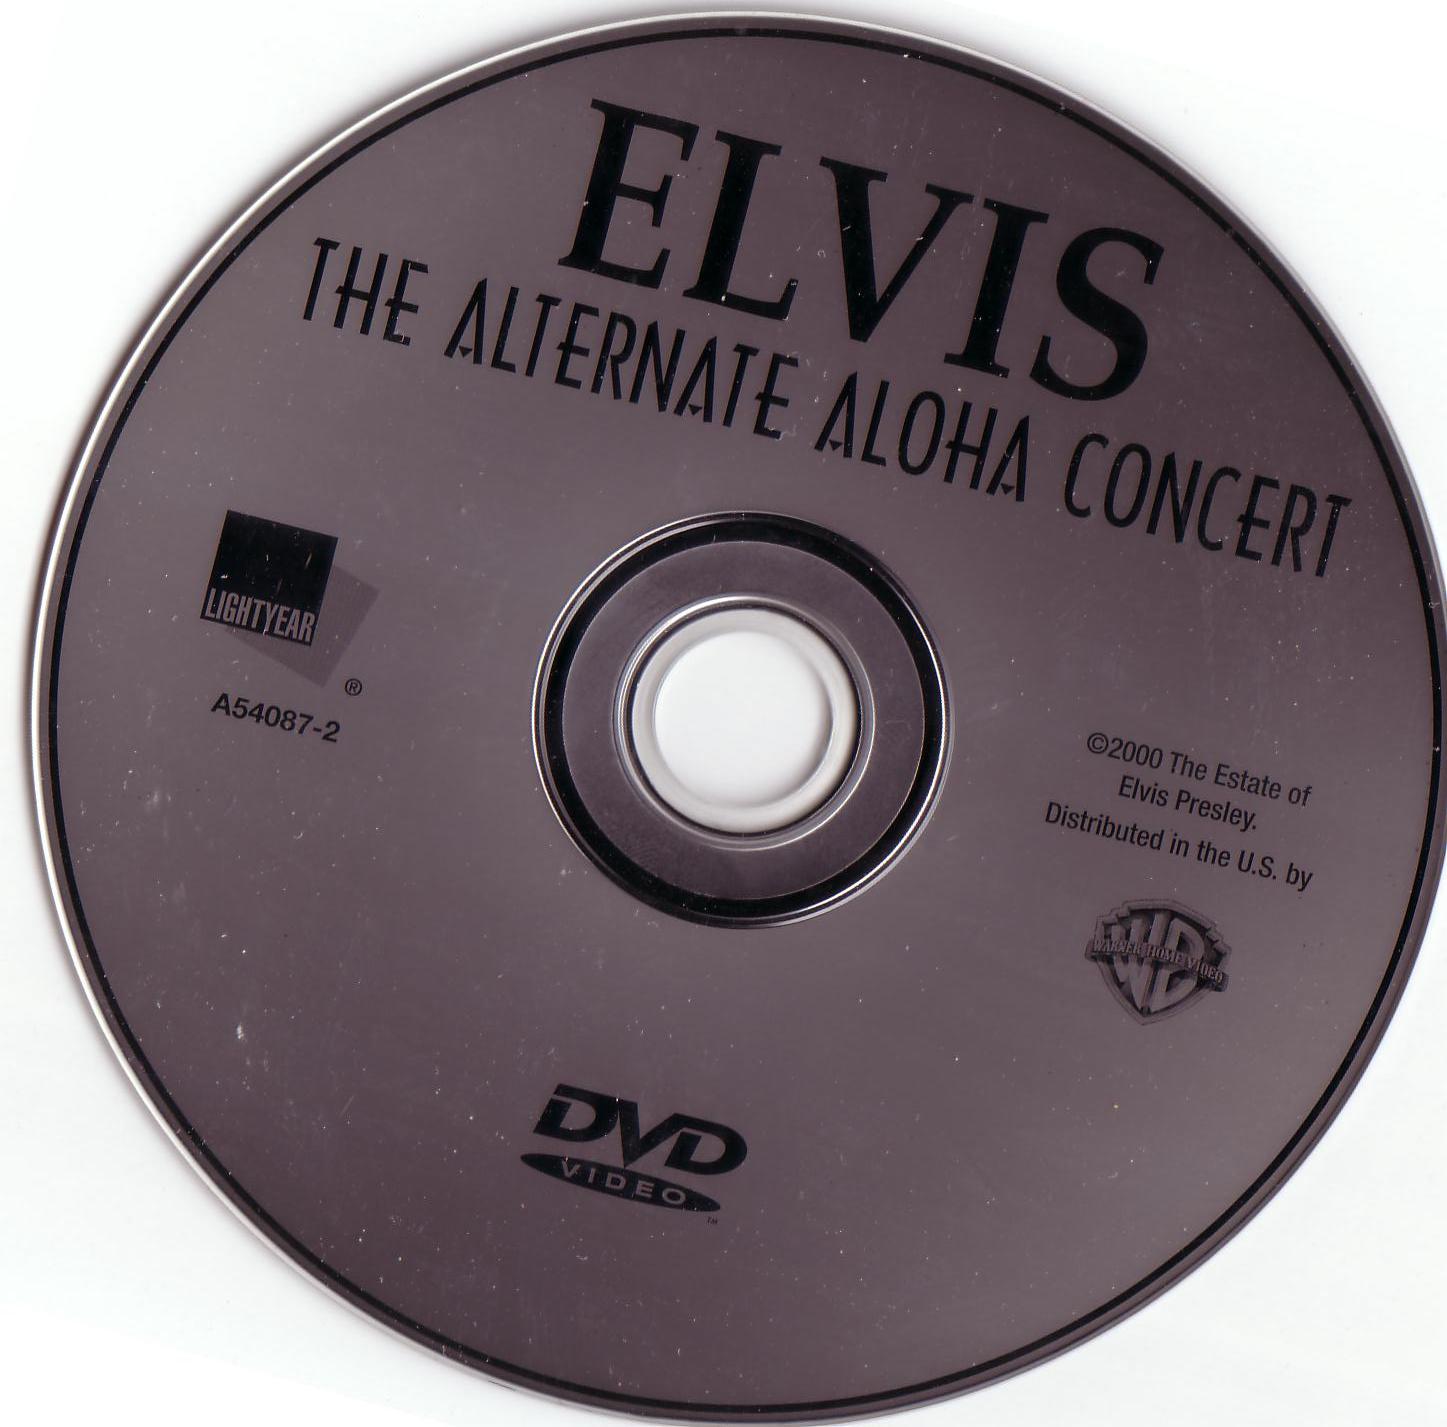 Elvis Presley The alternate aloha concert